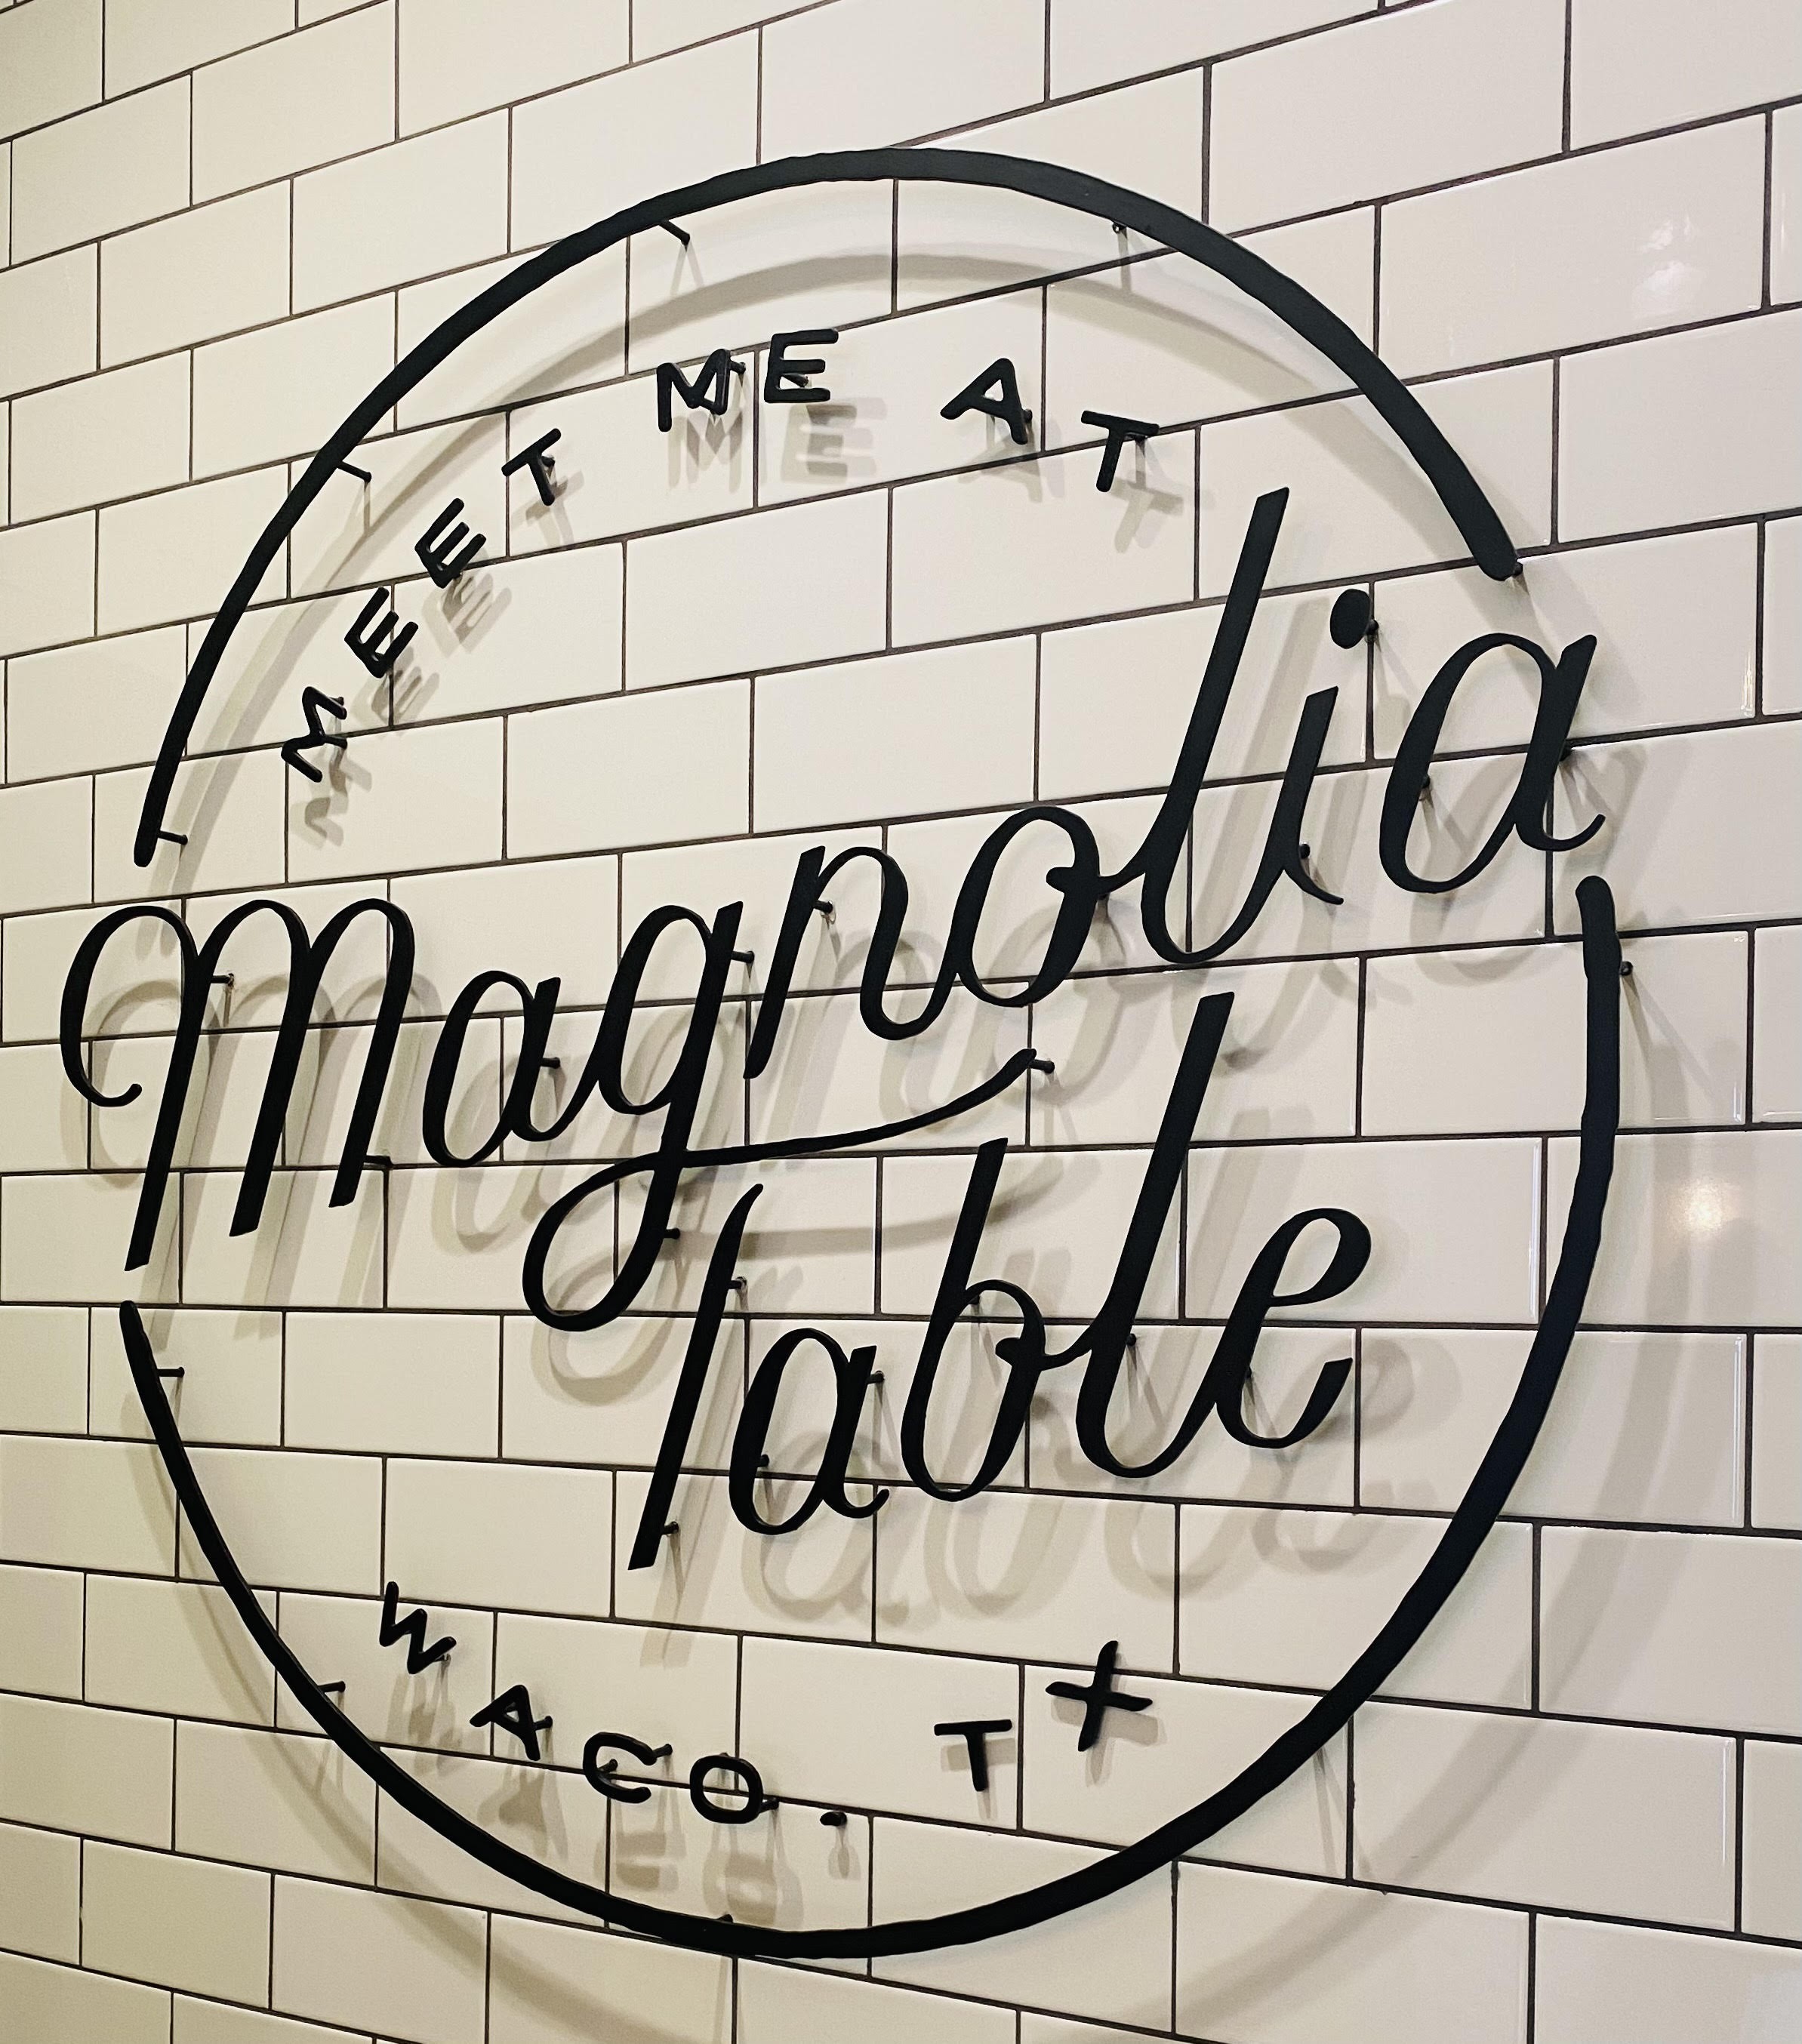 Magnolia Table restaurant in Waco, Texas 